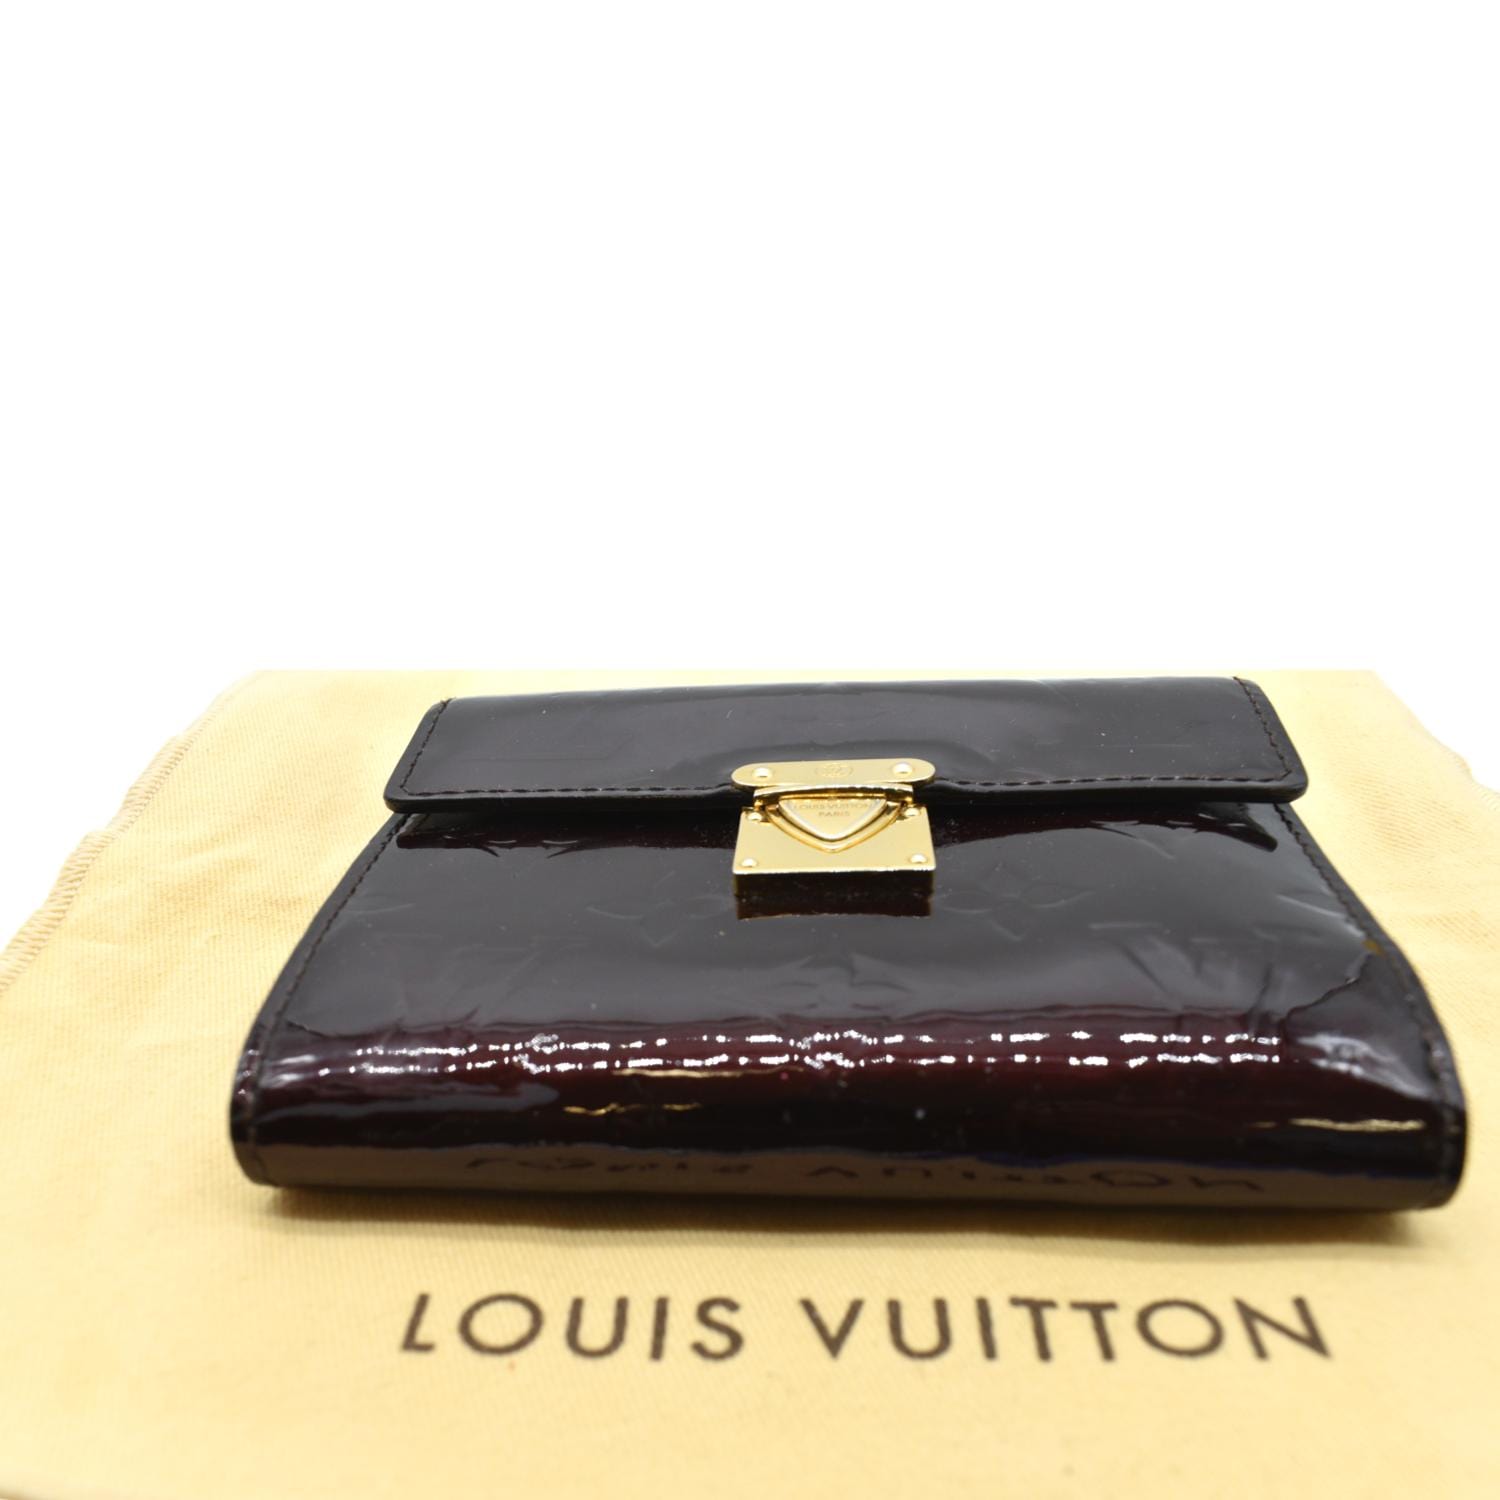 Louis Vuitton Damier Koala wallet [discontinued design], Luxury